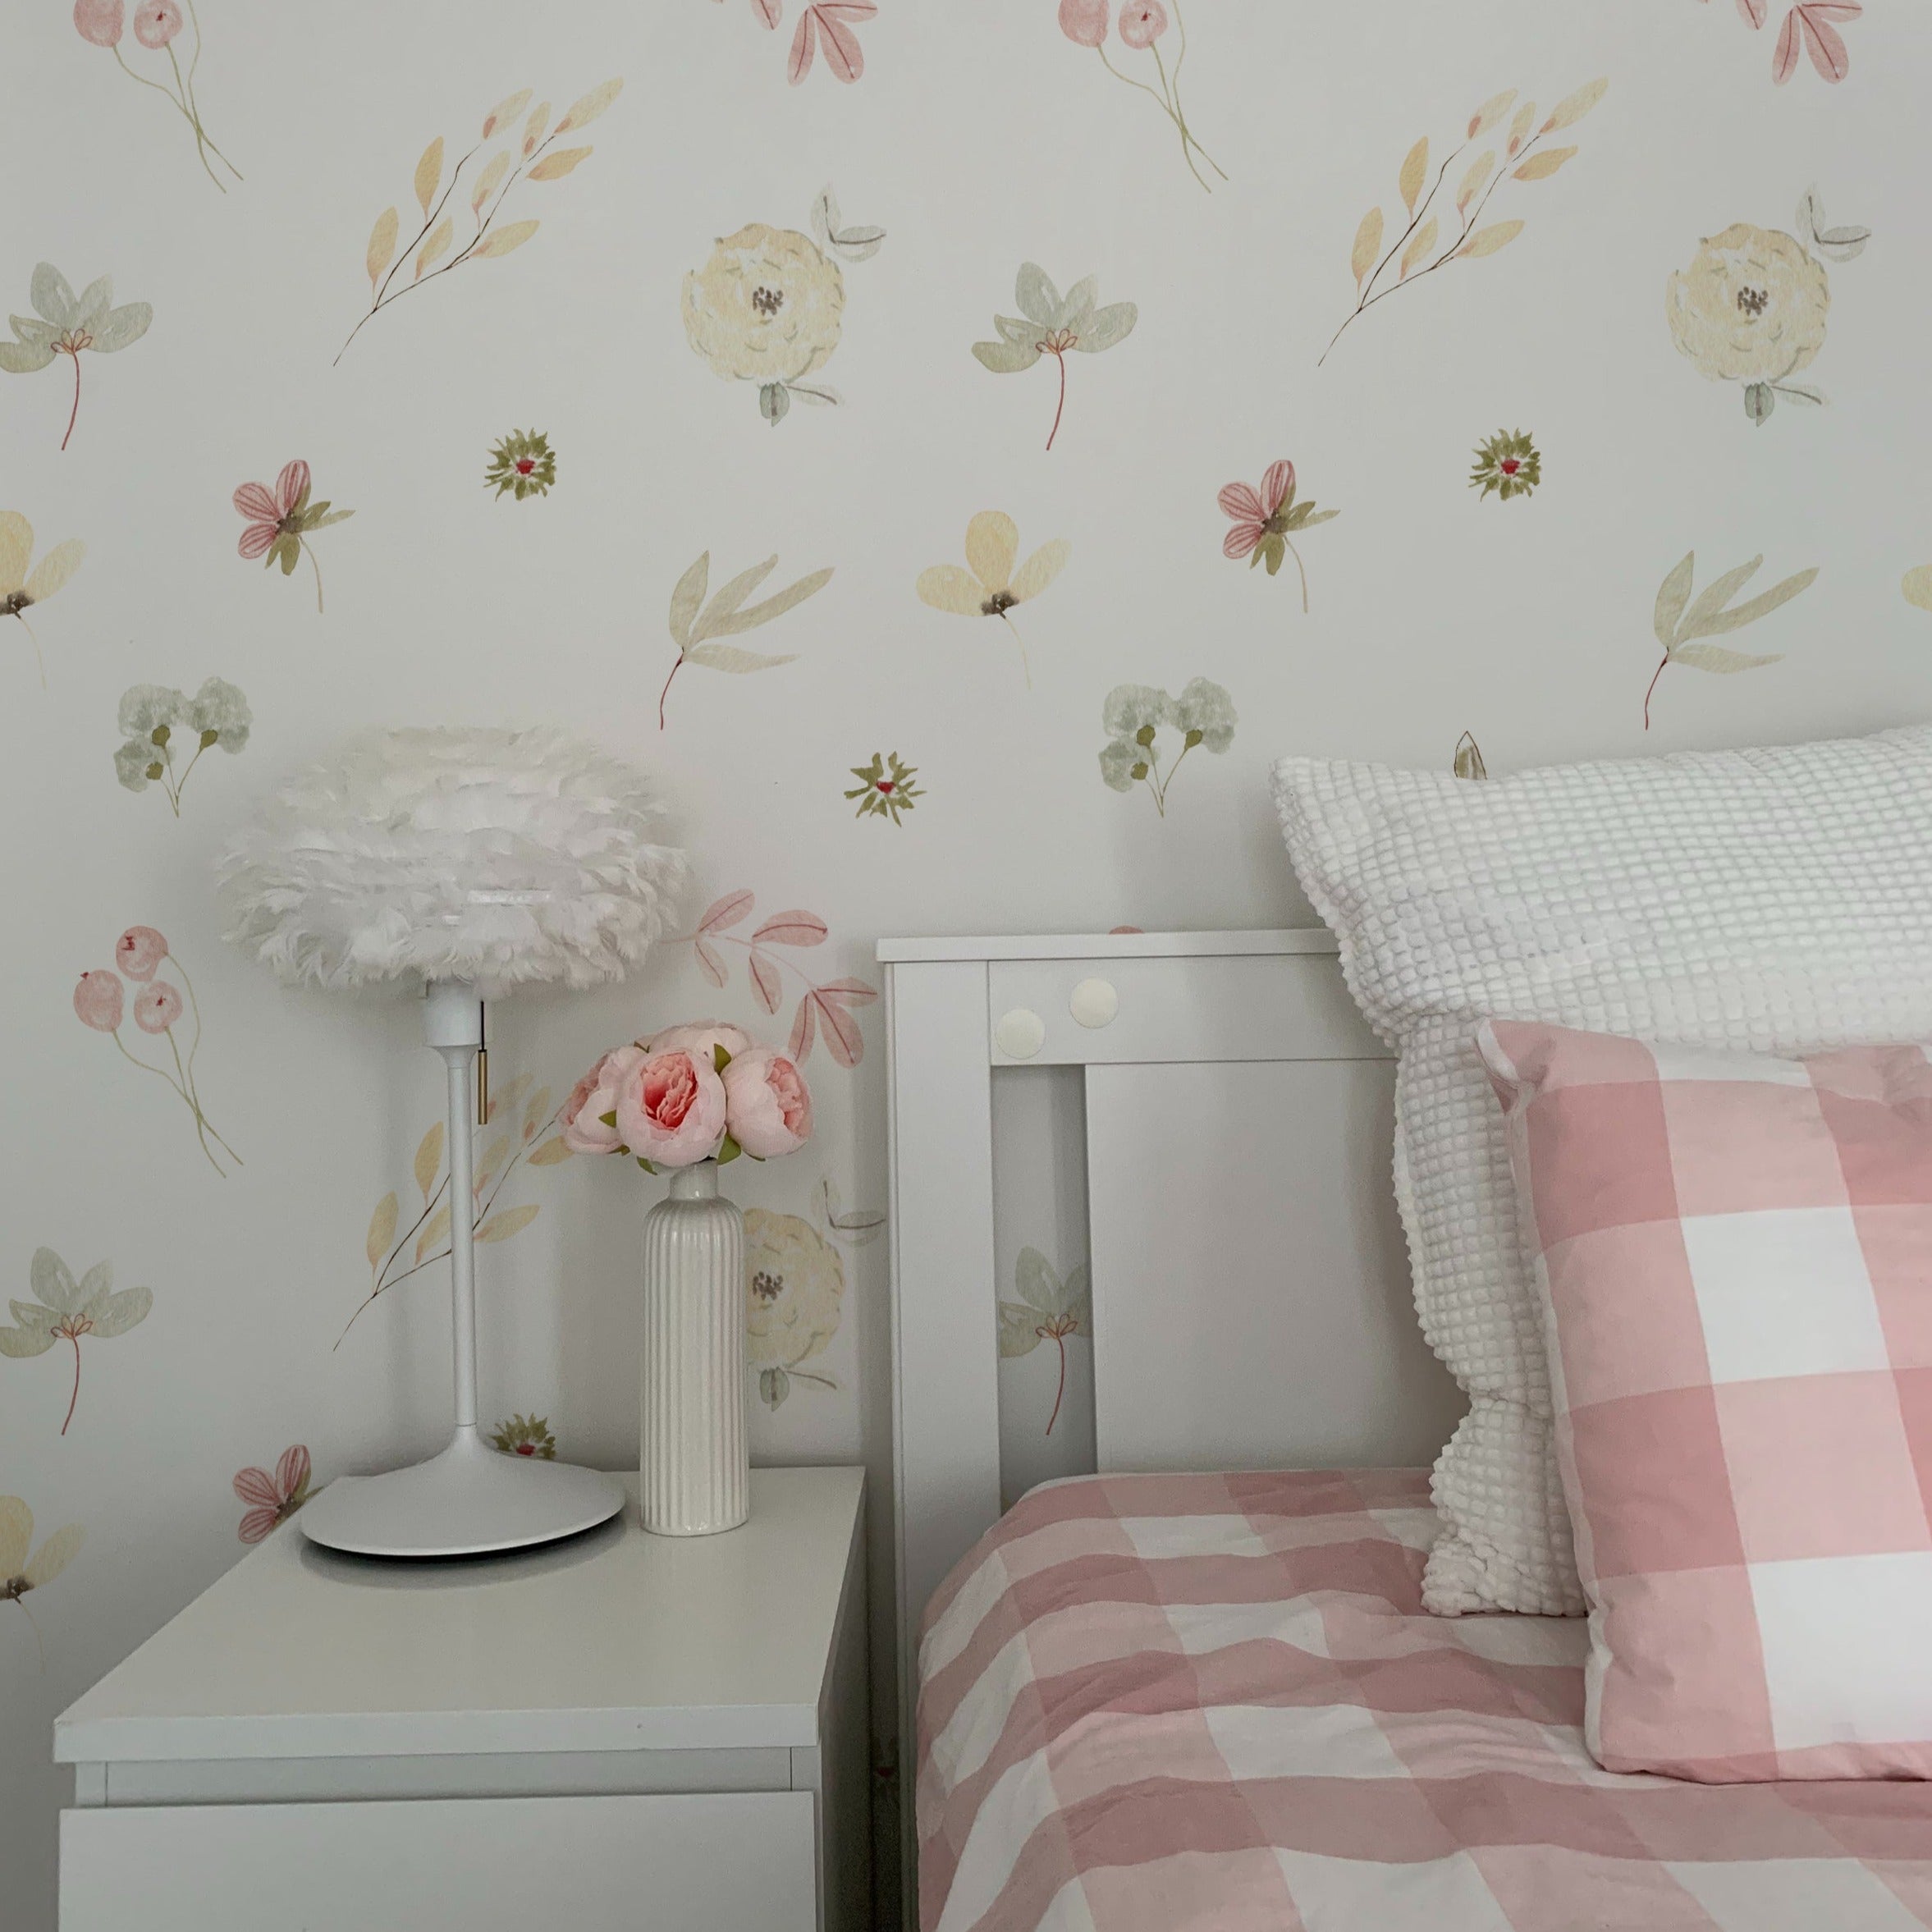 wallpaper, peel and stick wallpaper, Home decor, Pink wallpaper, watercolor wallpaper,  Pink watercolor floral wallpaper, bedroom wallpaper, kids room wallpaper, 